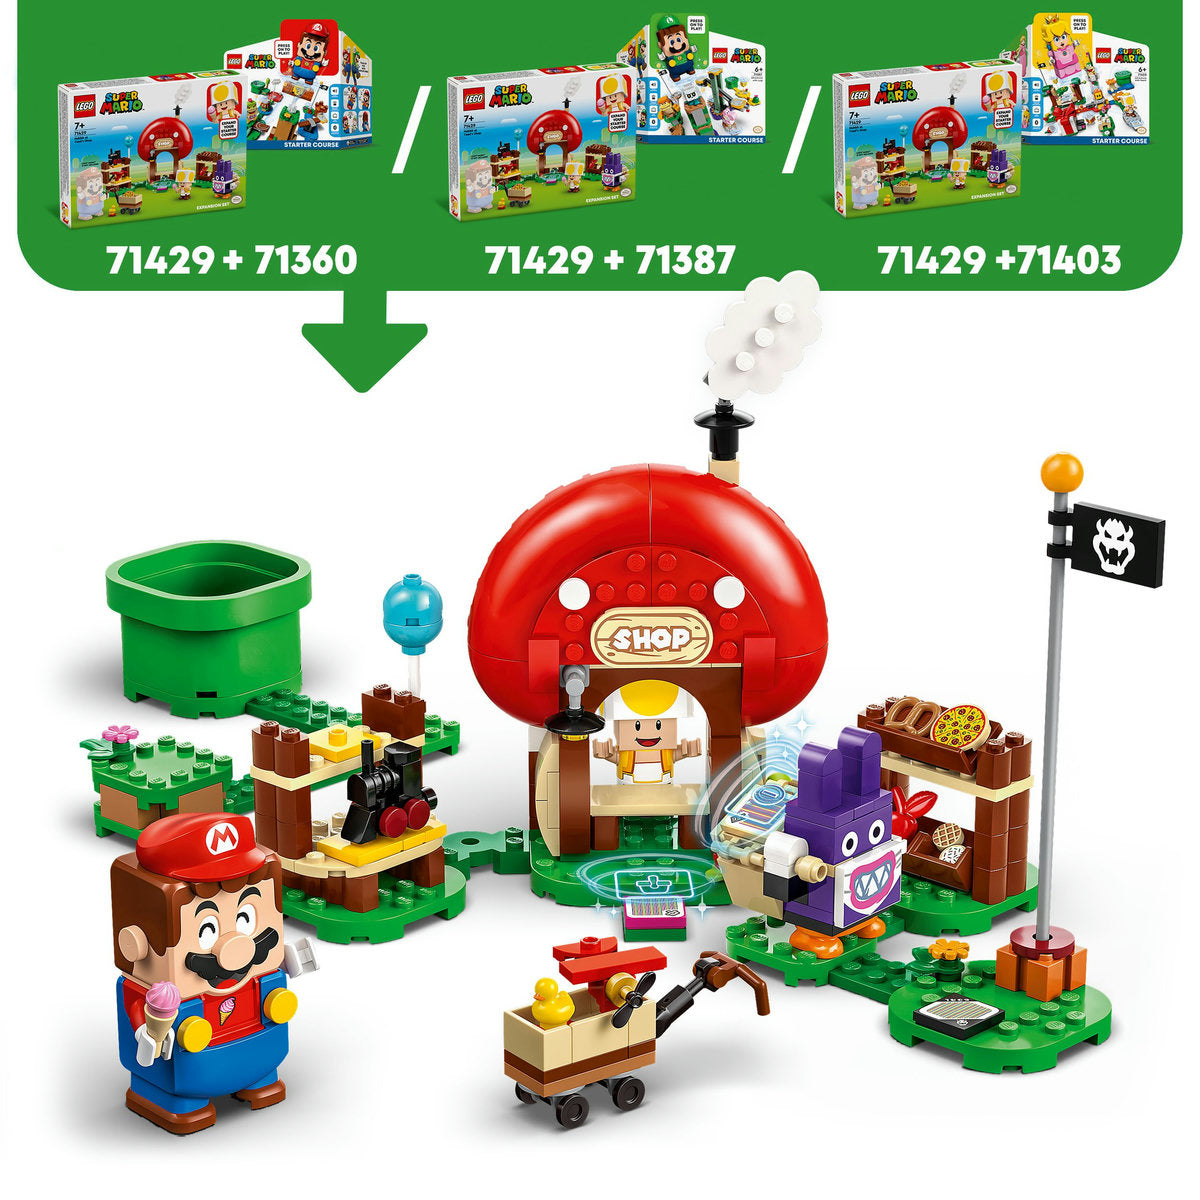 SET DE EXTINDERE: NABBIT LA MAGAZINUL LUI TOAD - LEGO SUPER MARIO - LEGO (71429)